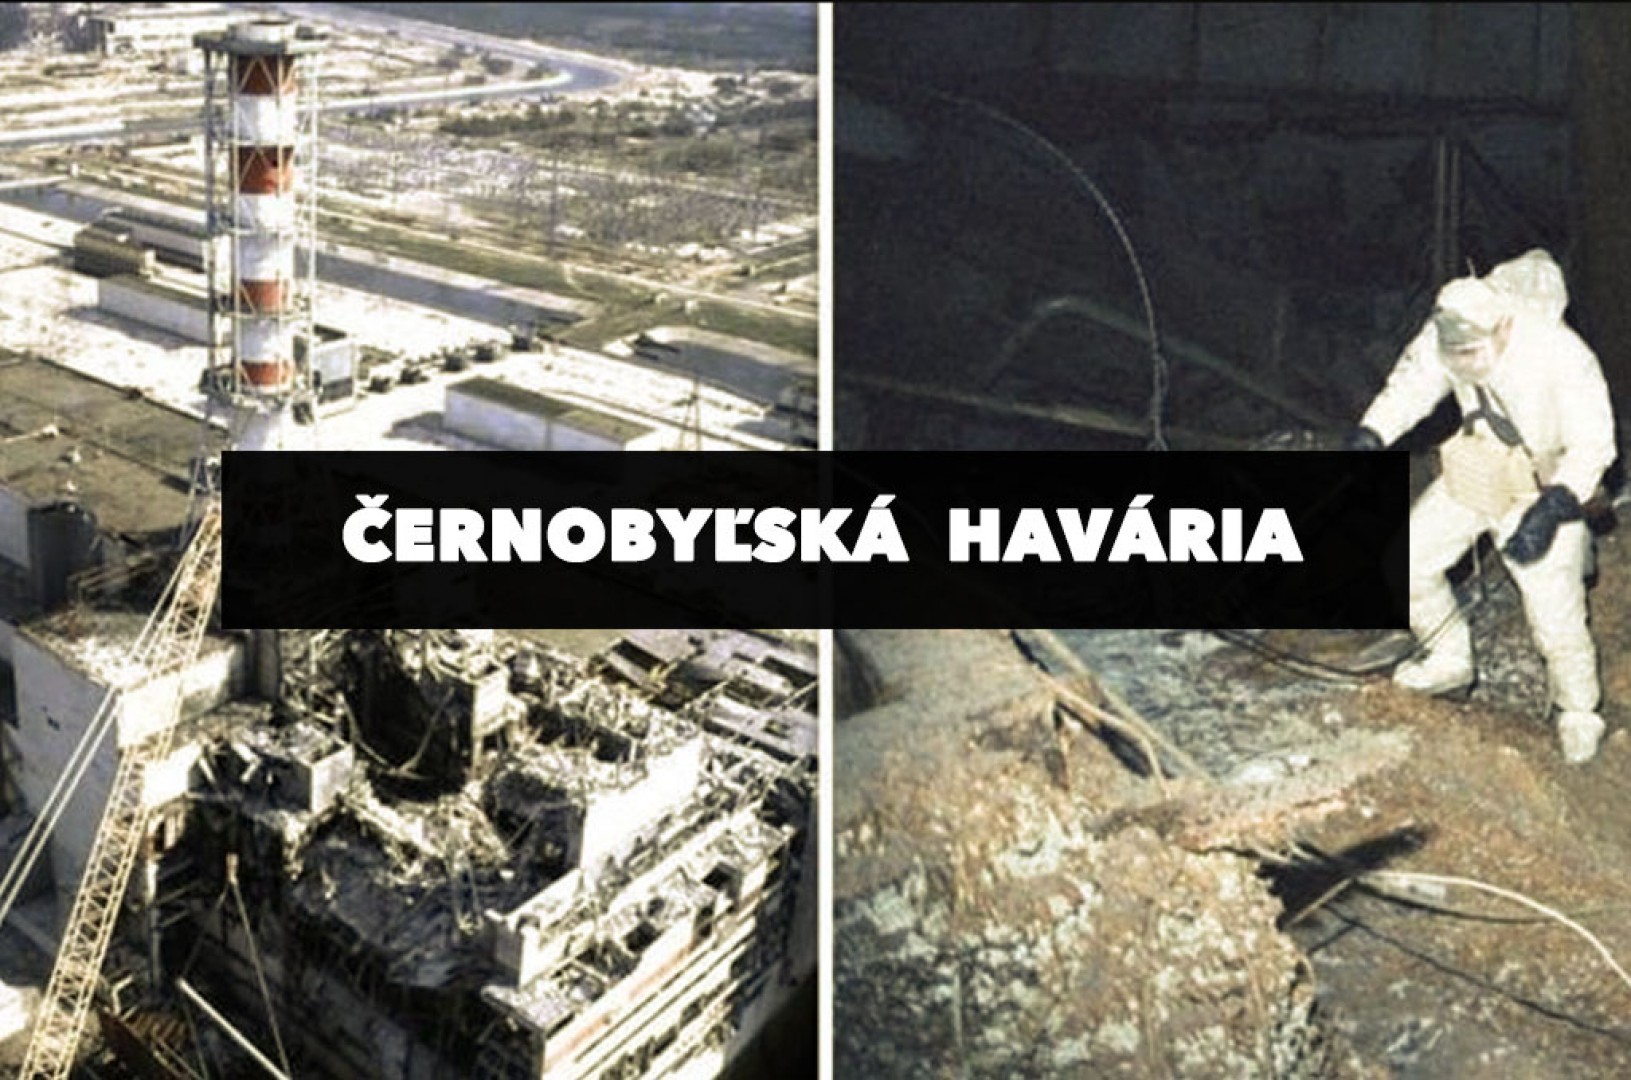 Černobyľ - nehoda a následky do dnešných dní